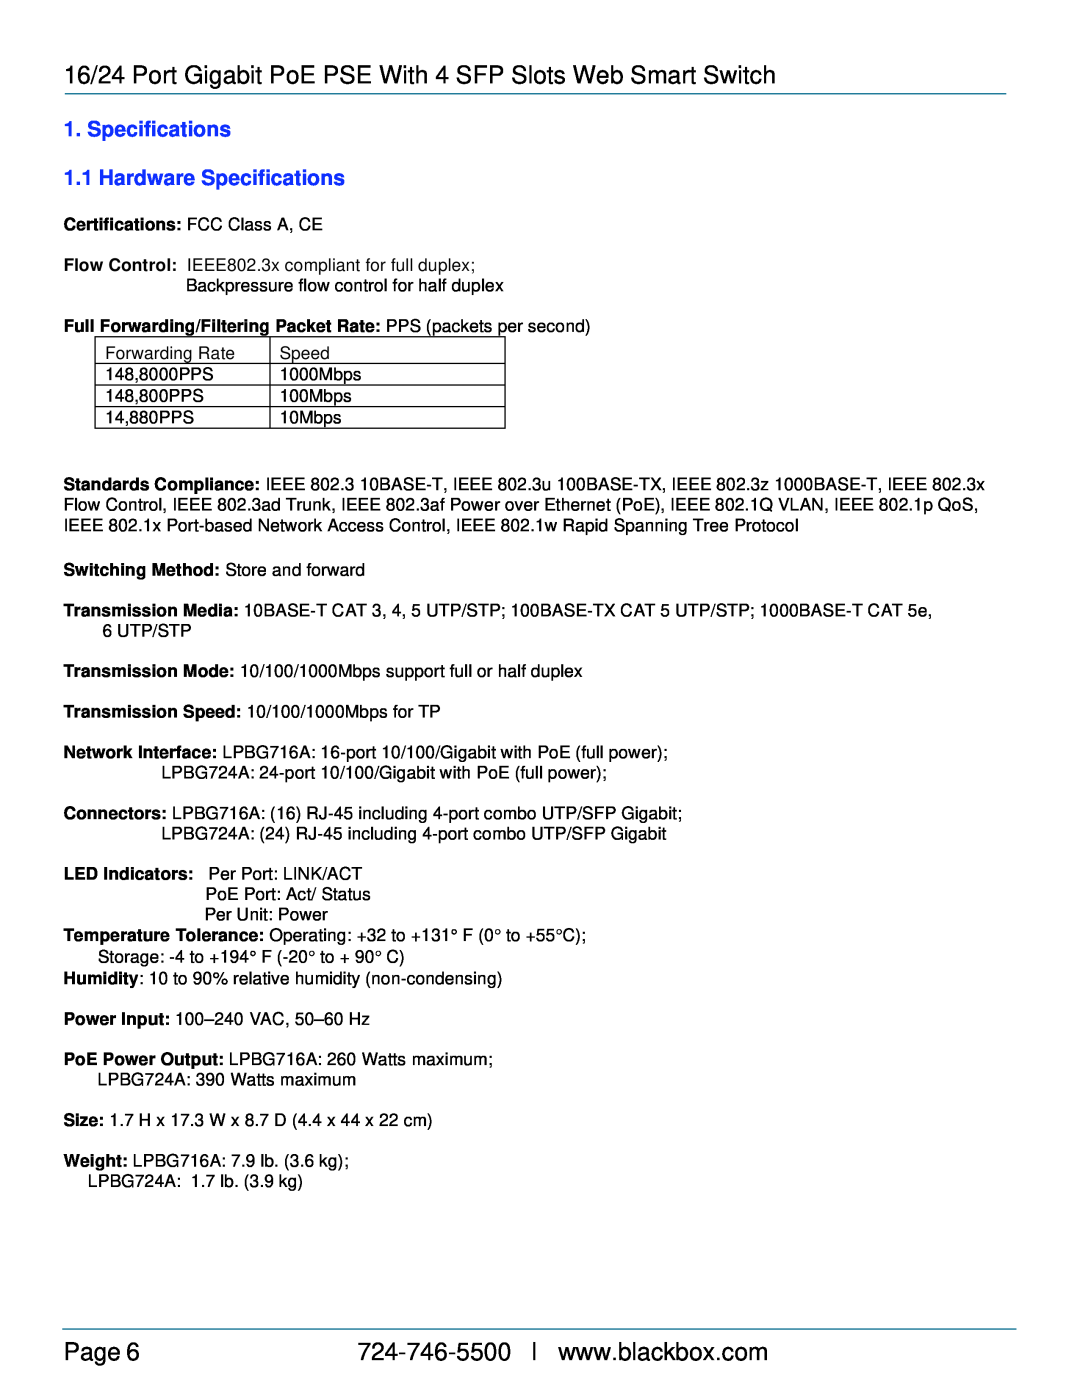 Black Box LPBG724A, LPBG716A manual Specifications 1.1 Hardware Specifications, Certifications: FCC Class A, CE, Page 